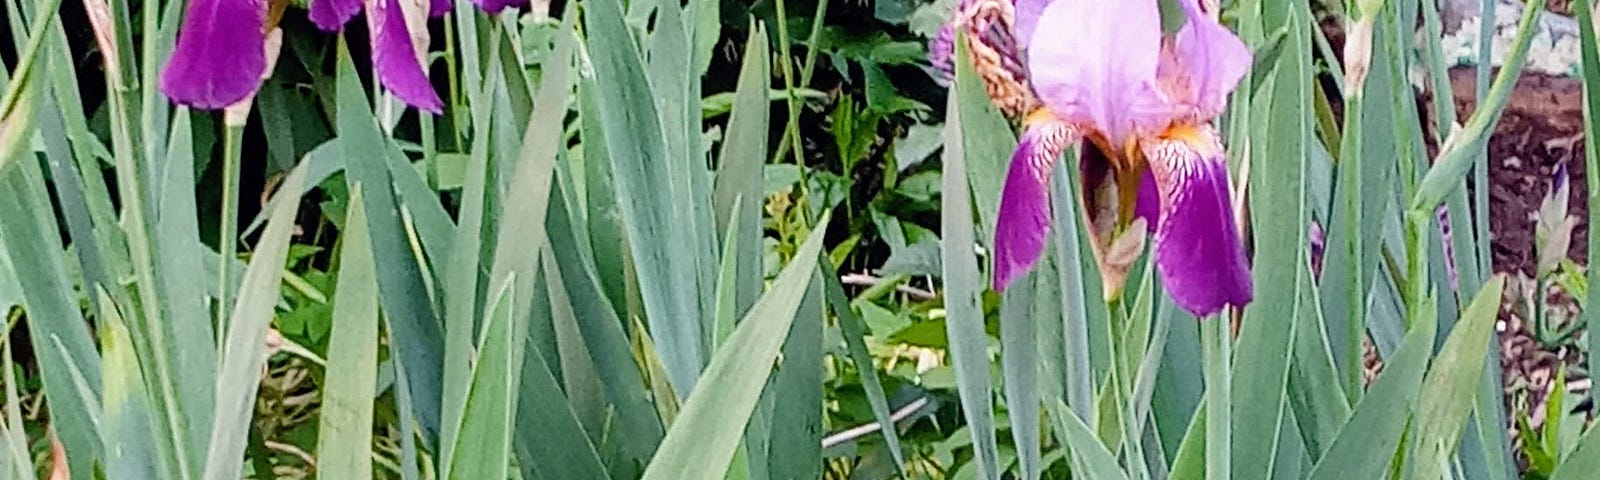 A plot of Bearded Iris growing in a local community garden.